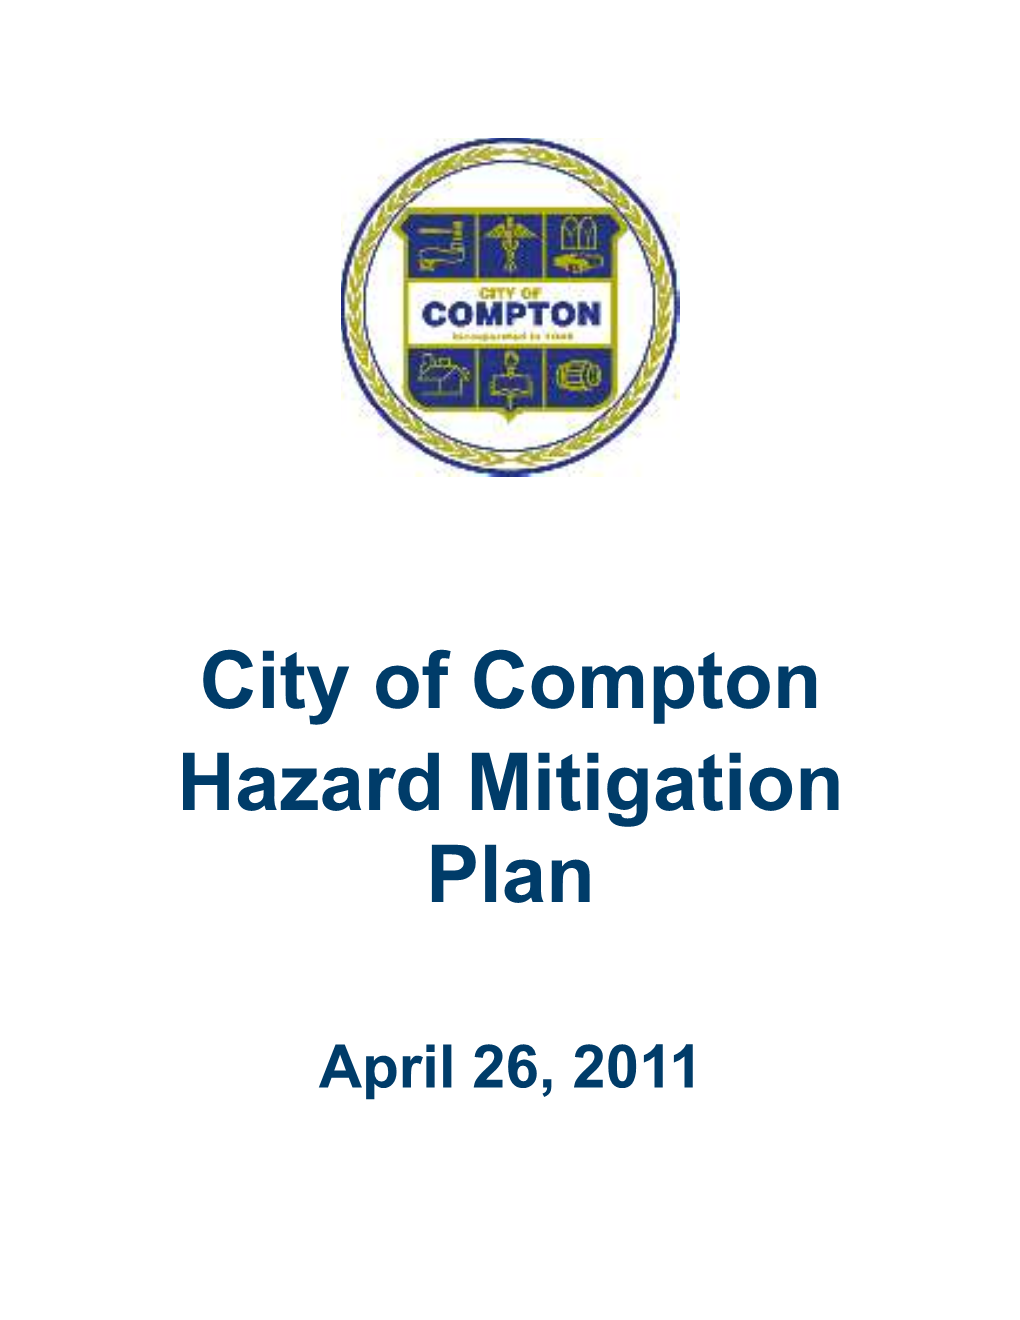 City of Compton Hazard Mitigation Plan